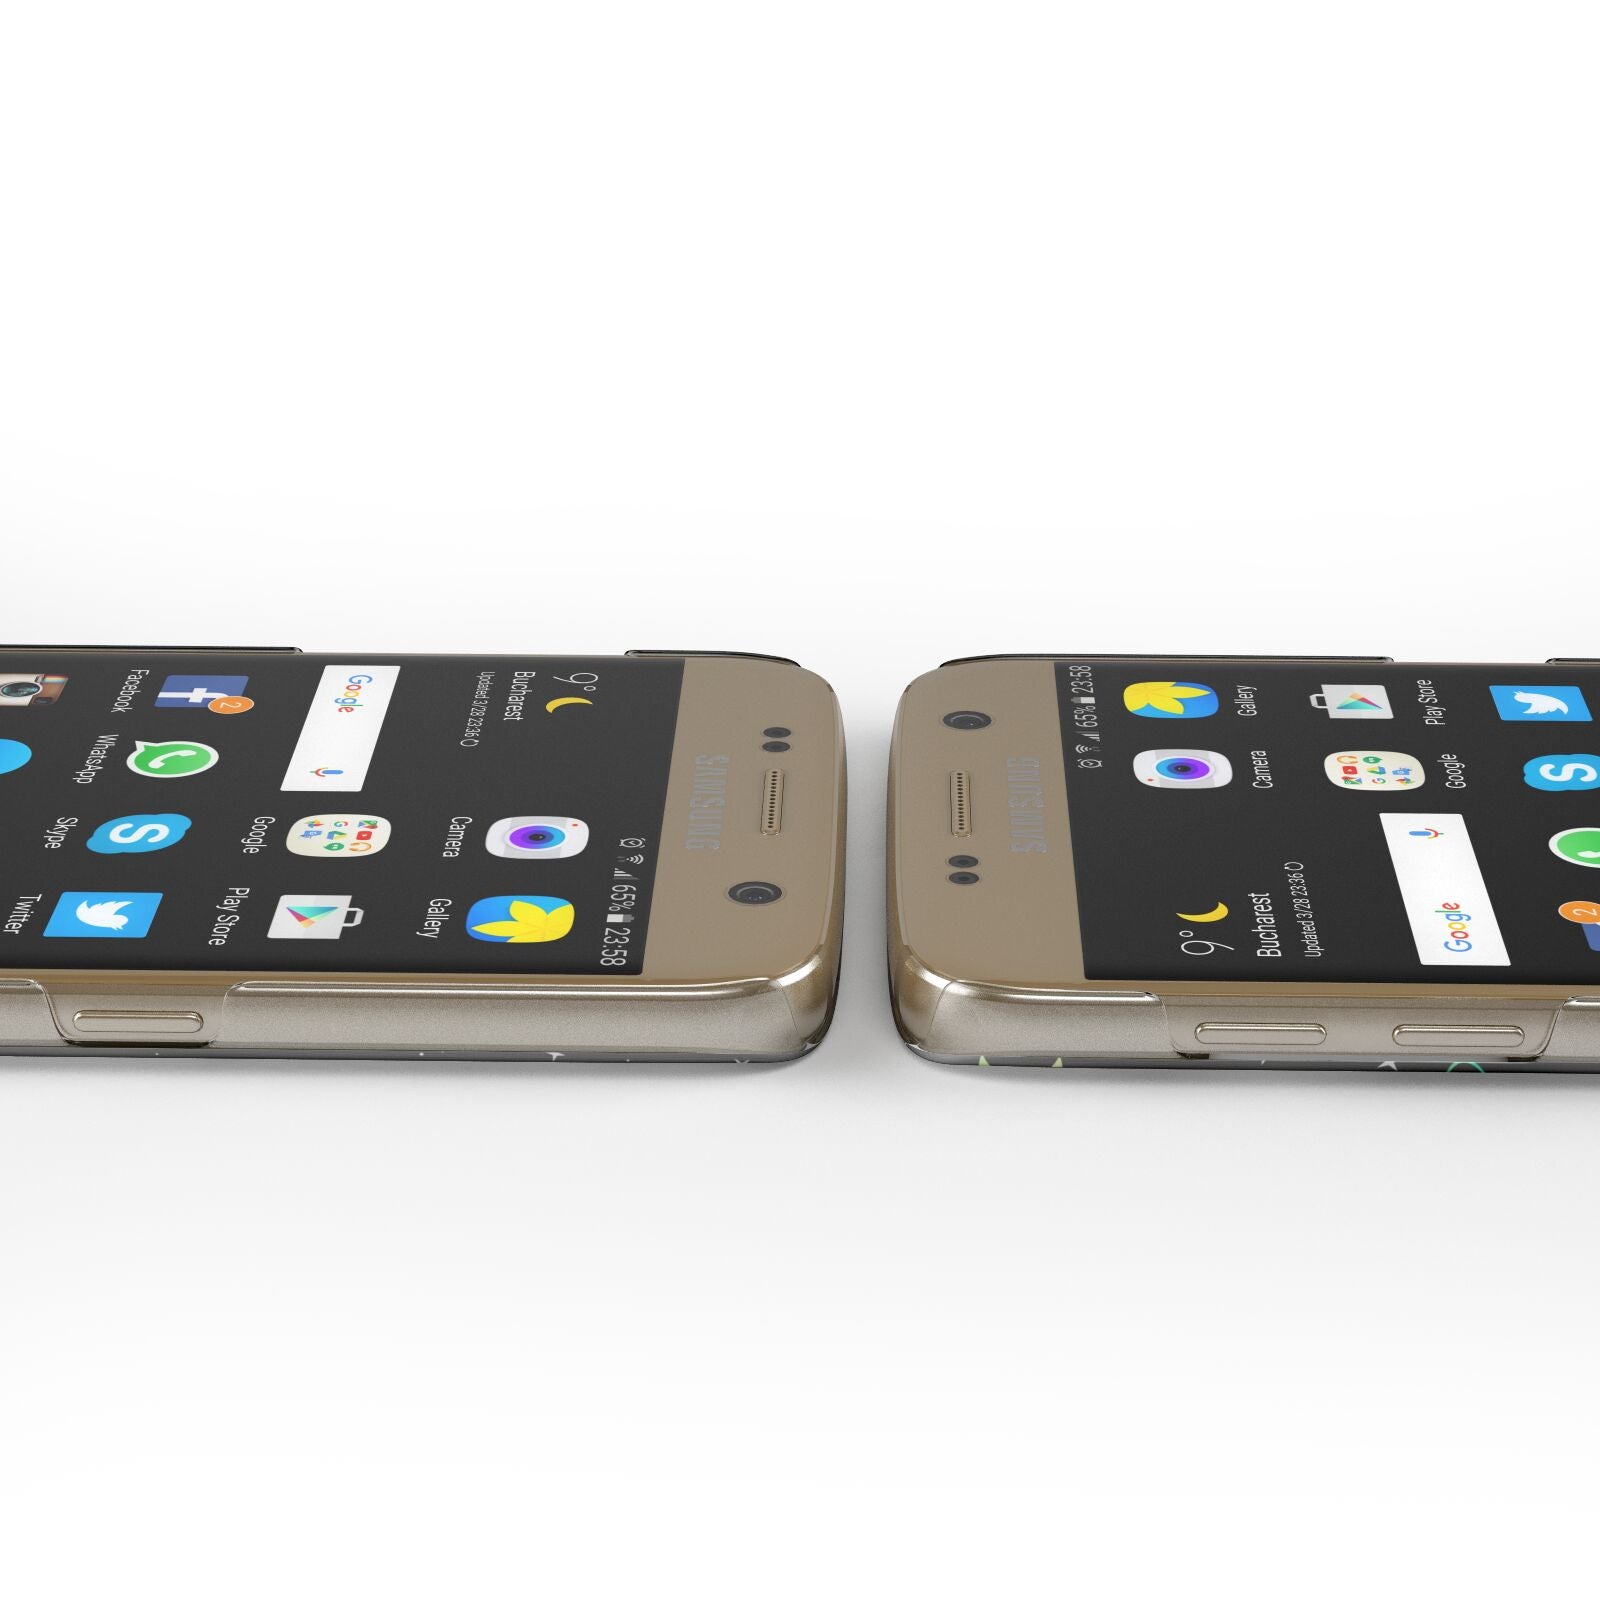 Green Galaxy Personalised Name Samsung Galaxy Case Ports Cutout